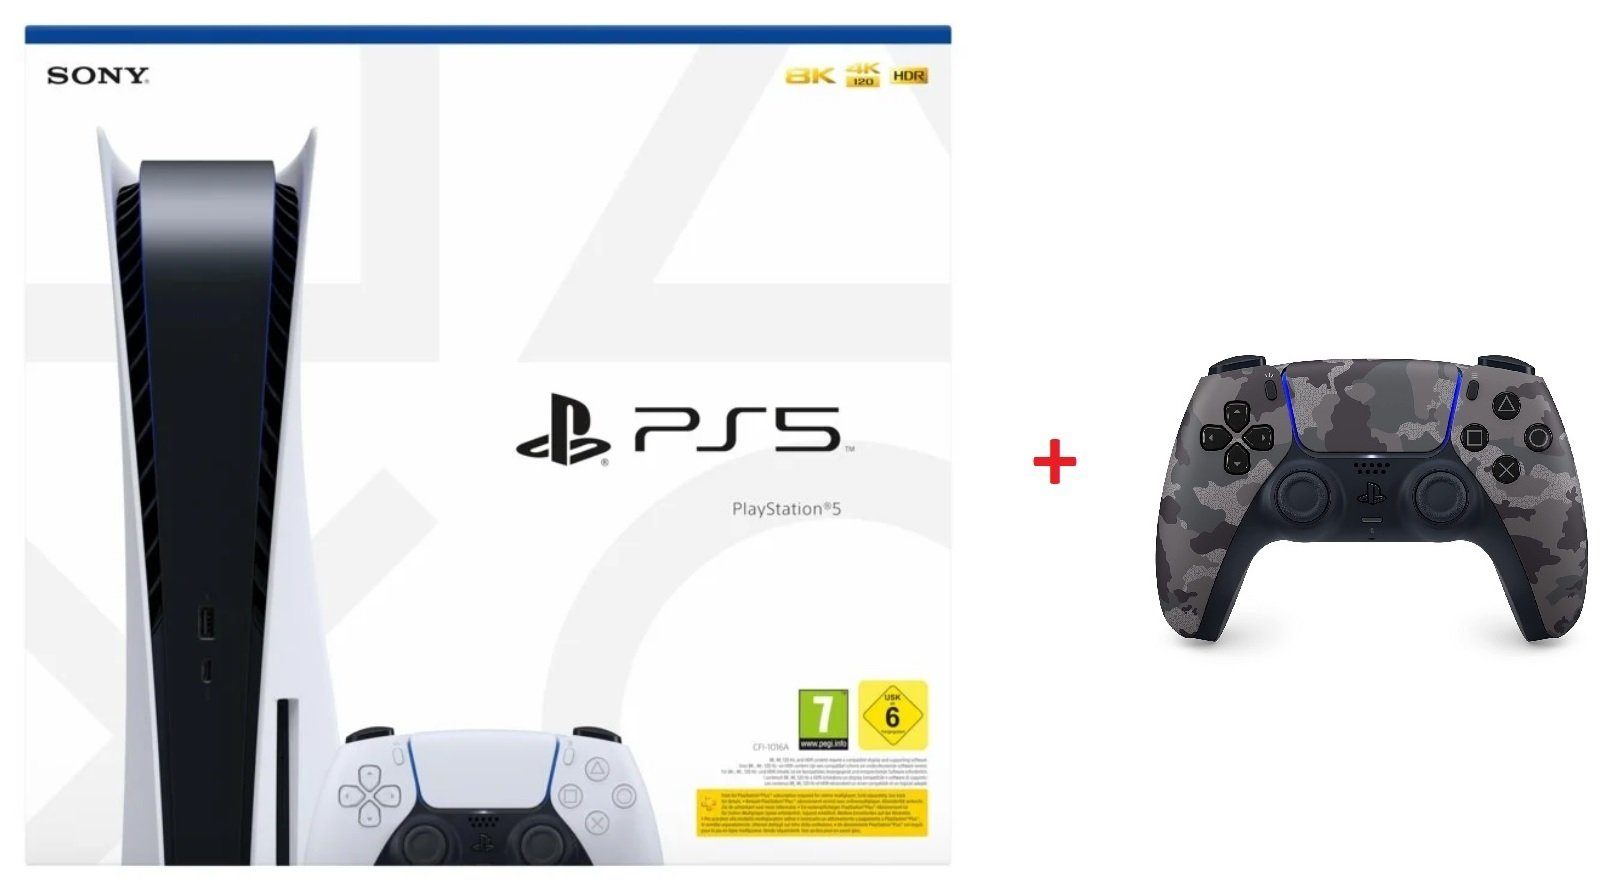 Playstation Playstation 5 Konsole Disk CD-Laufwerk Edition + 2 Controller, nach Wunschfarbe